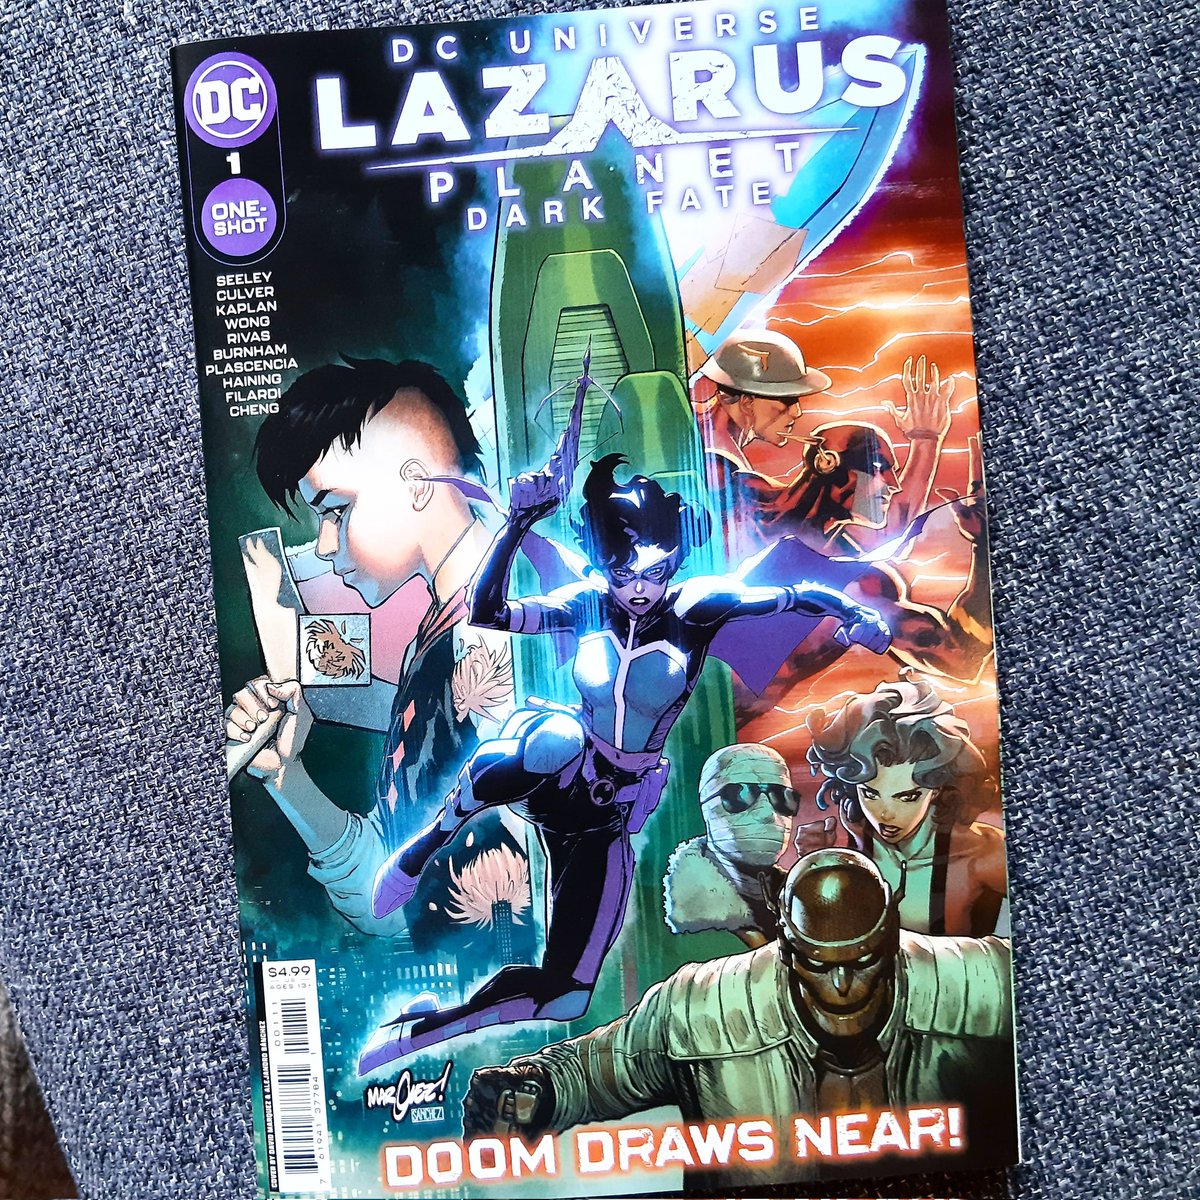 #DCUniverse #DCU #LazarusPlanet #DoomPatrol #Flash ⚡ #Huntress #Robotman #NegativeMan #ElastiGirl #DavidMarquez #AlejandroSánchez